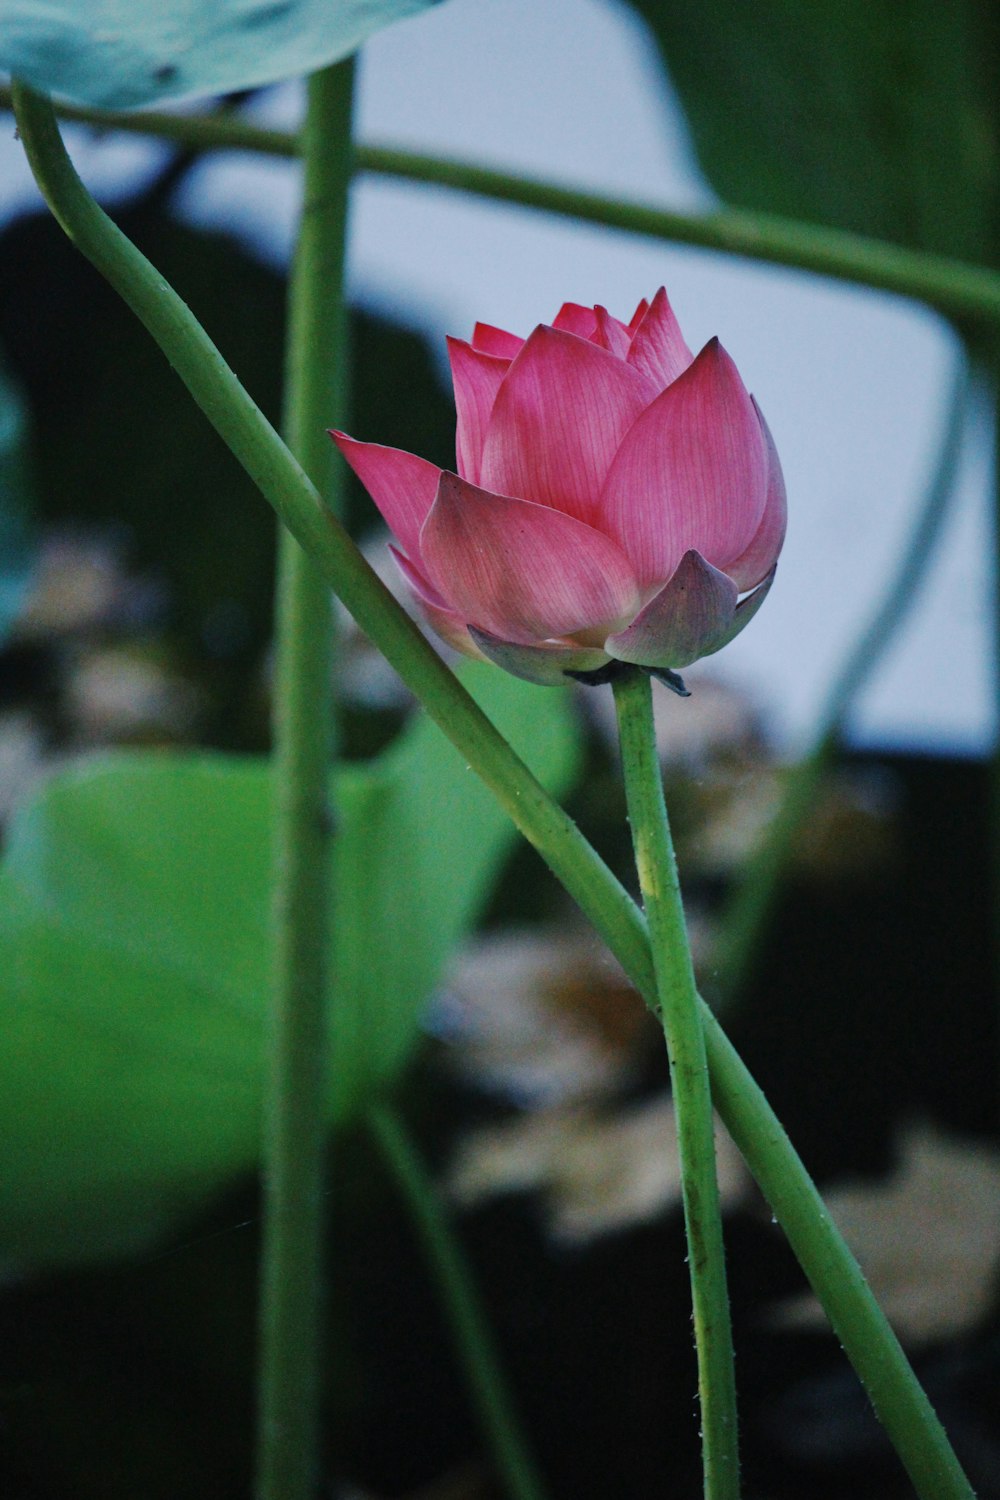 A single pink flower up close.